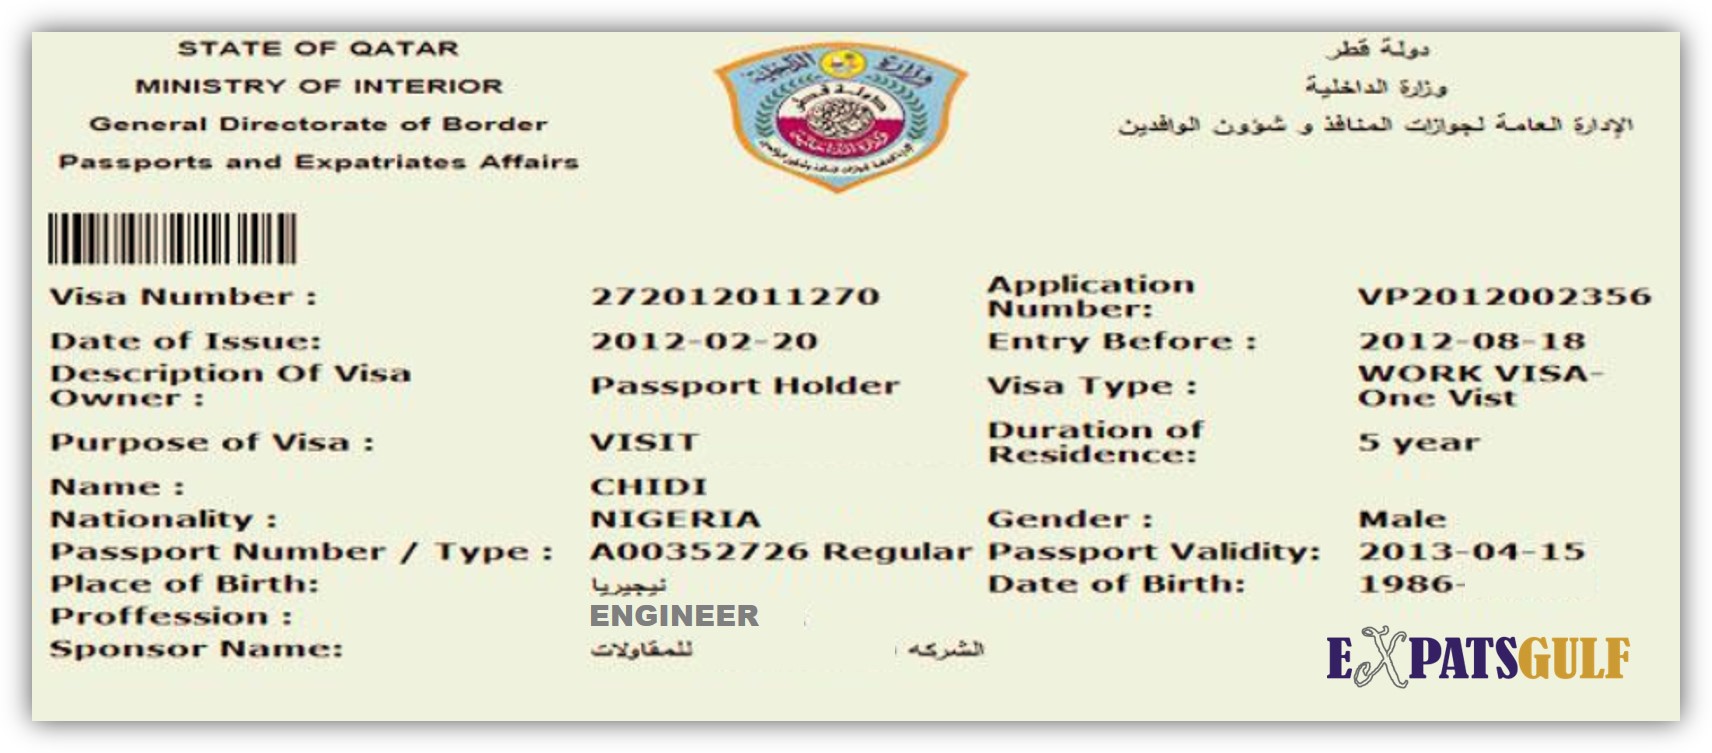 tourist visa for qatar from india price